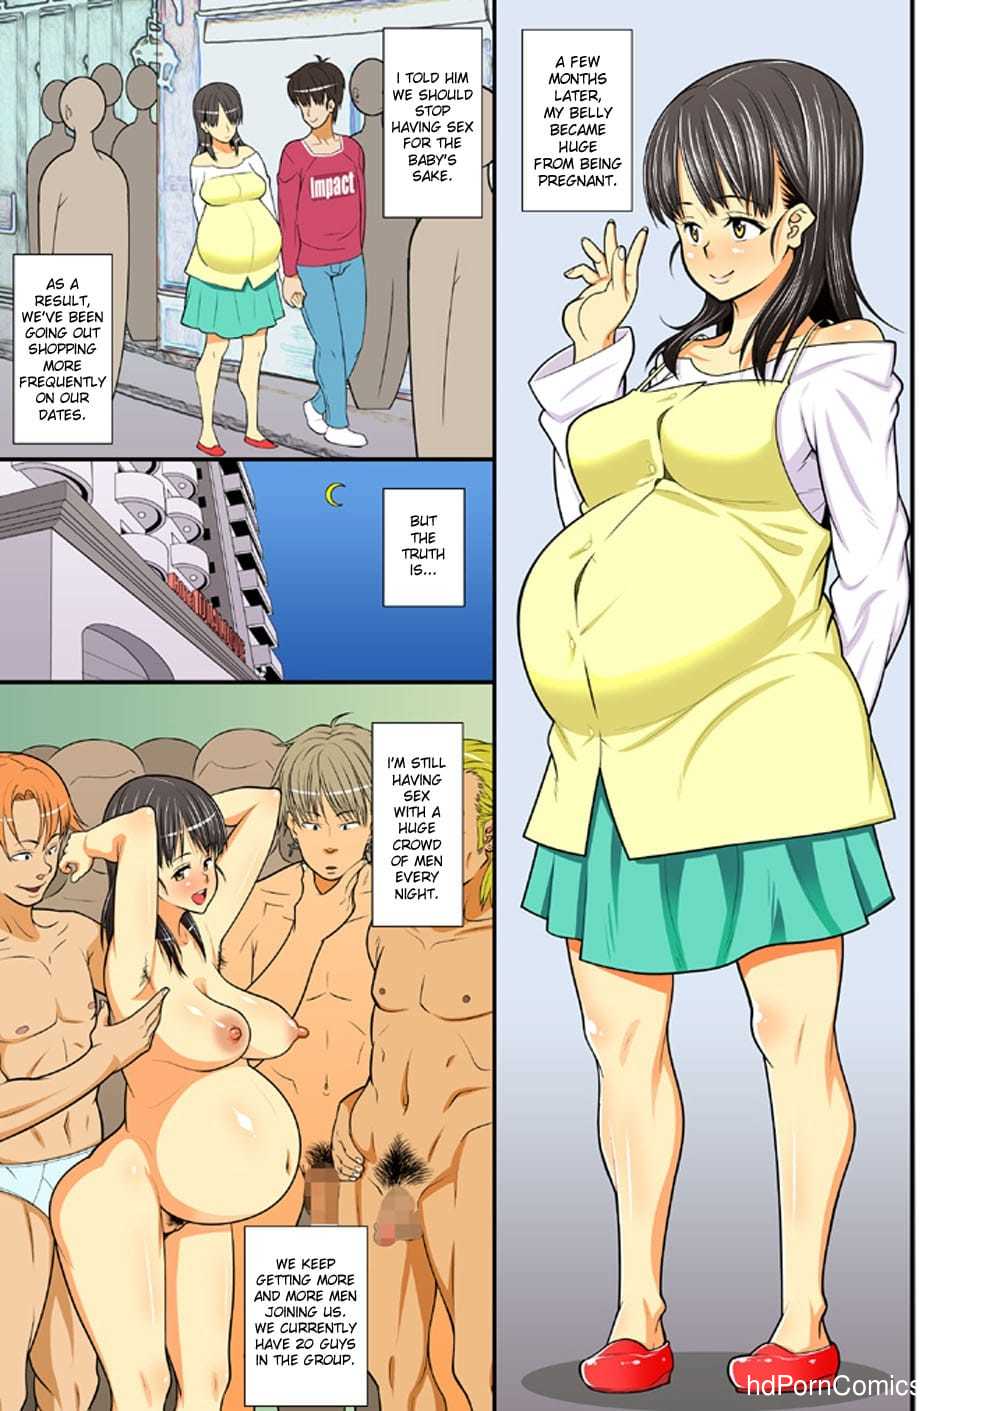 Nanaki Inoue Pregnant All The Time Free Cartoon Porn Comic Hd Porn Comics